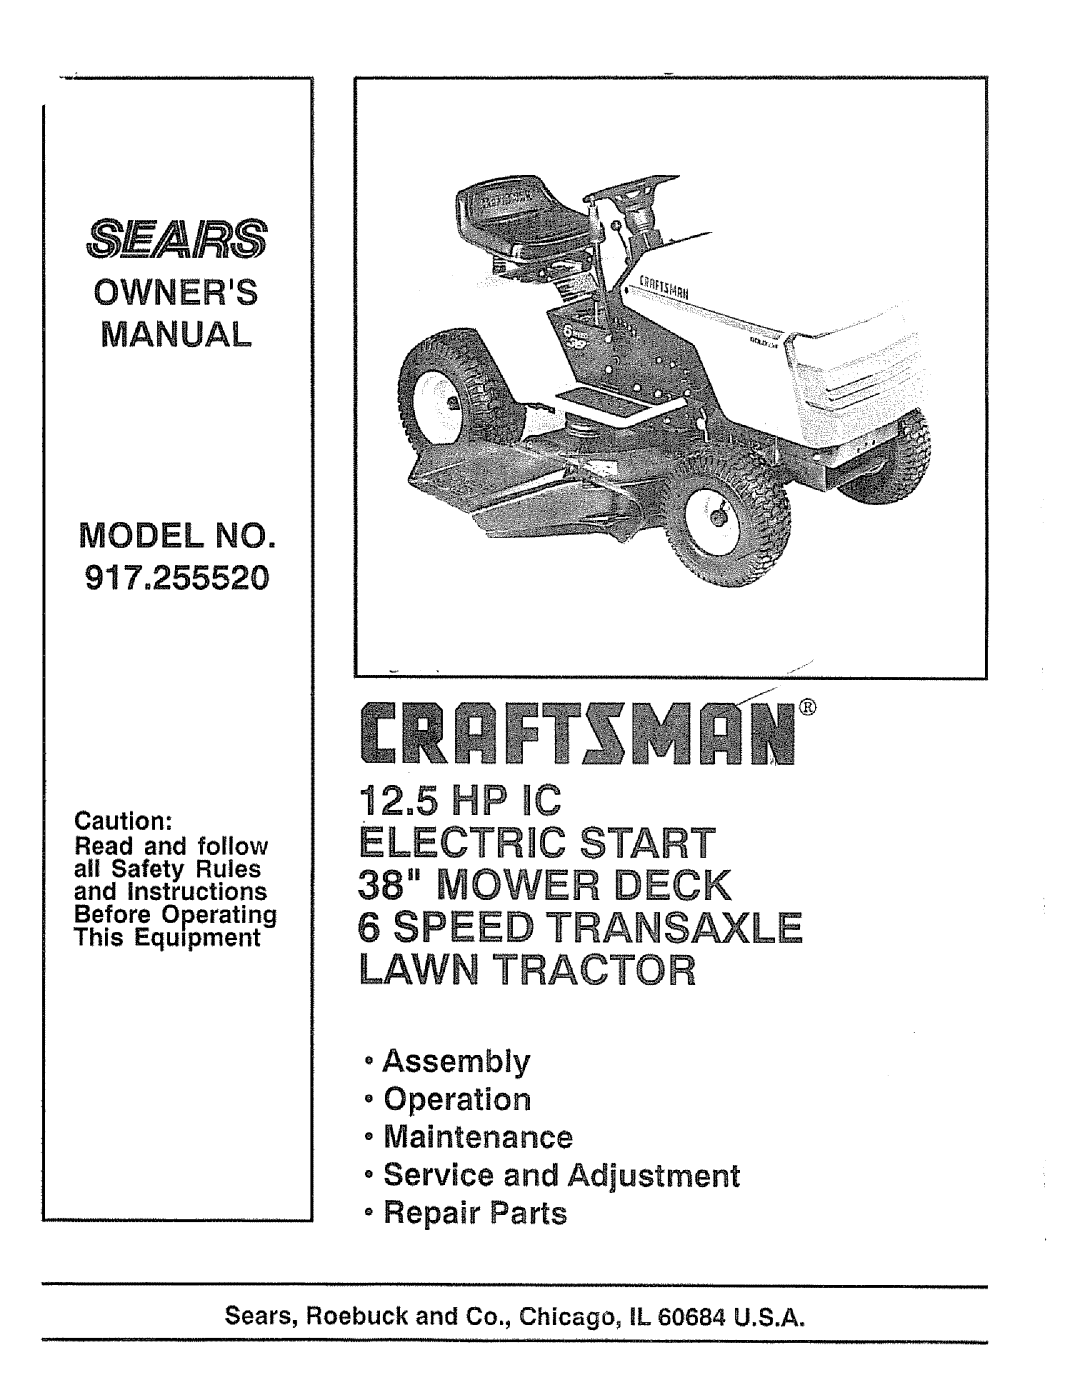 Craftsman manual 917.255520, oAssembly o Operation Maintenance, Service and Adjustment Repair Parts, Model No, I,IMll 